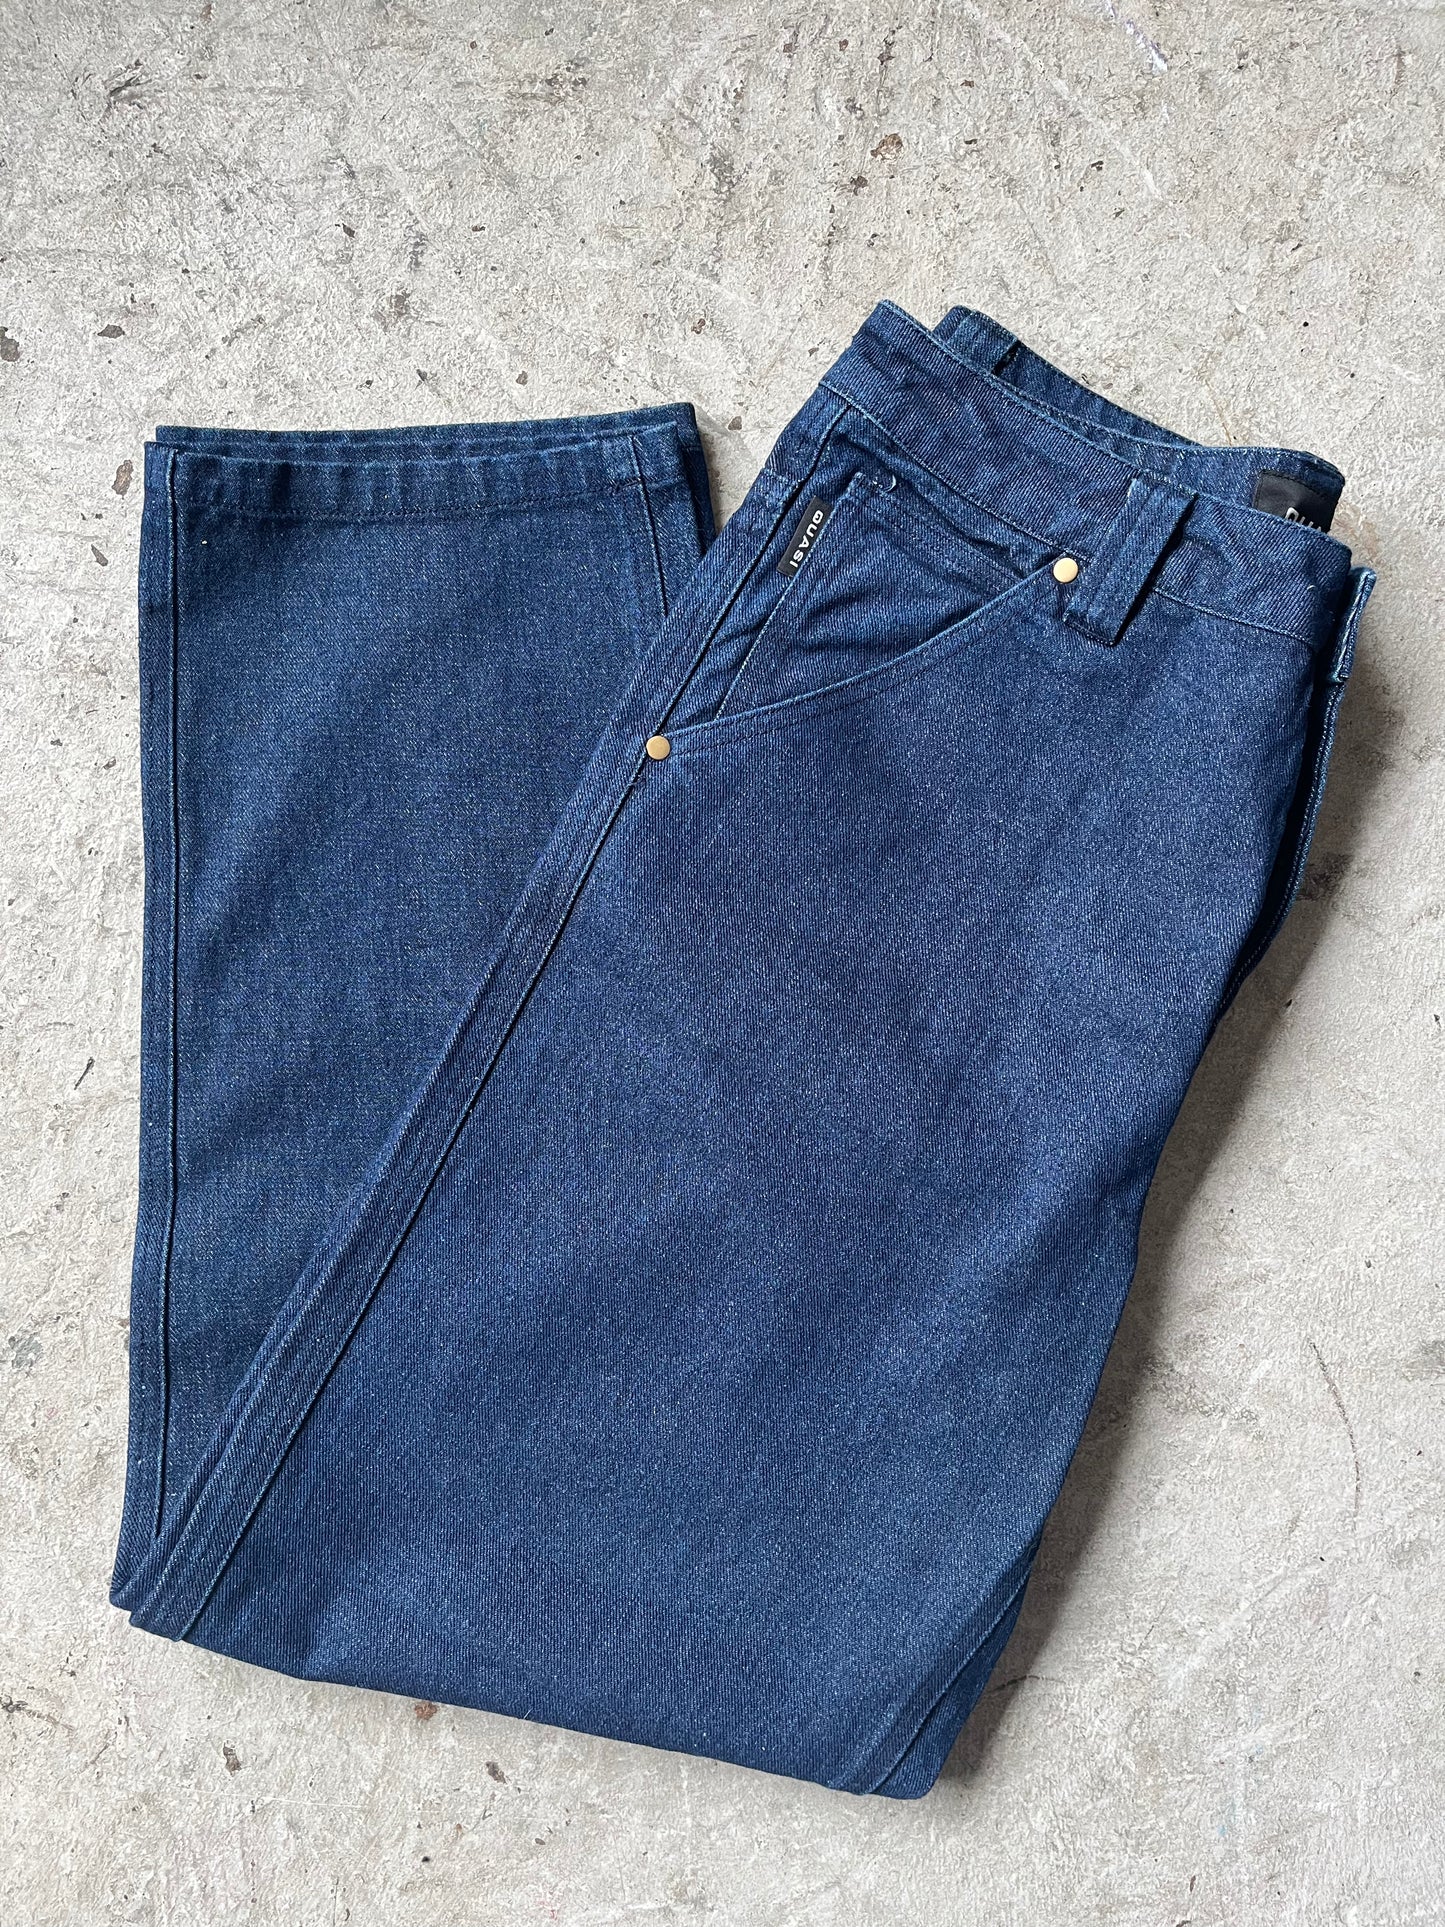 101 Blue Jeans